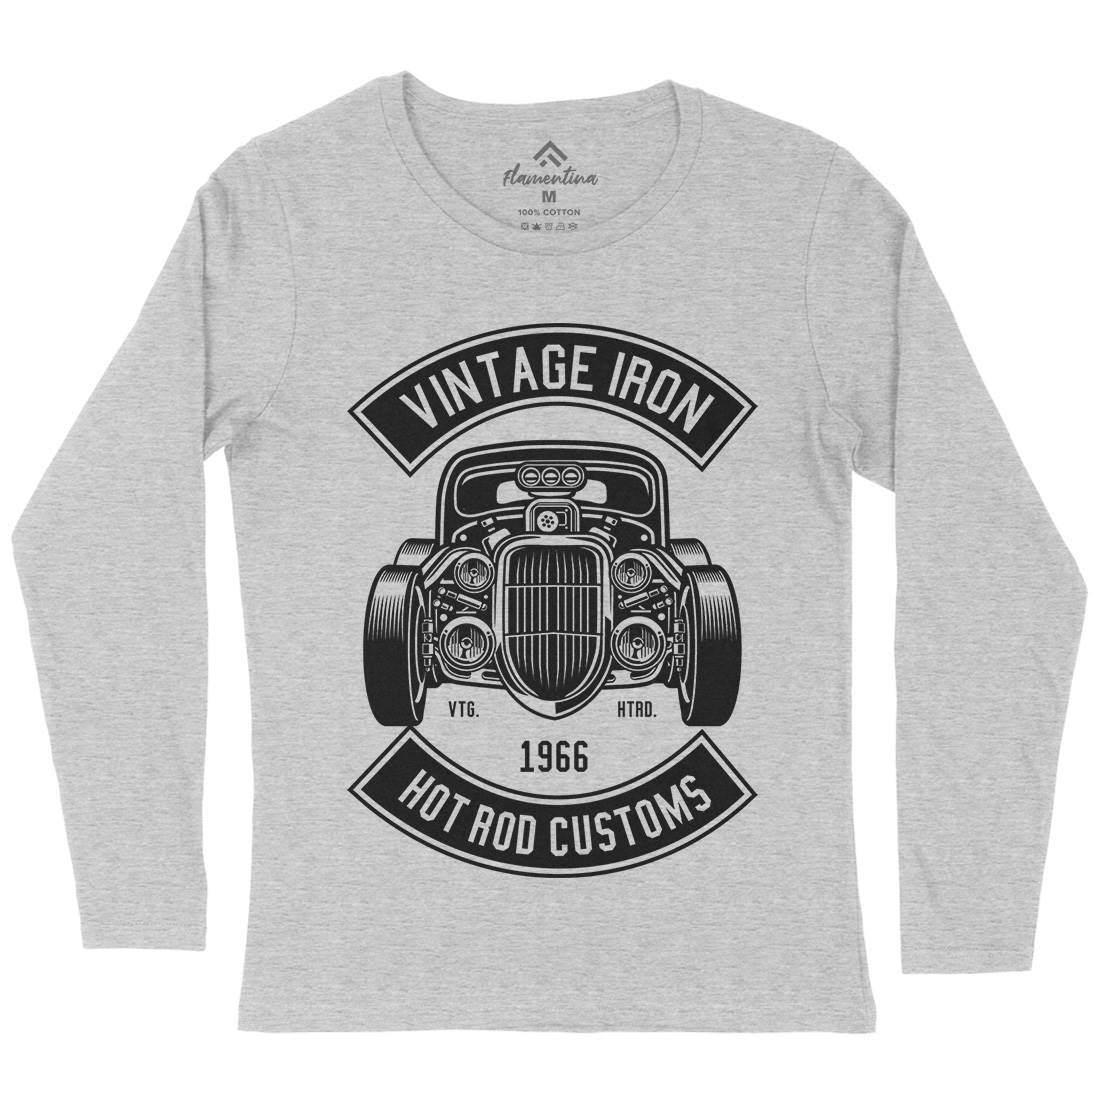 Vintage Iron Womens Long Sleeve T-Shirt Cars B666